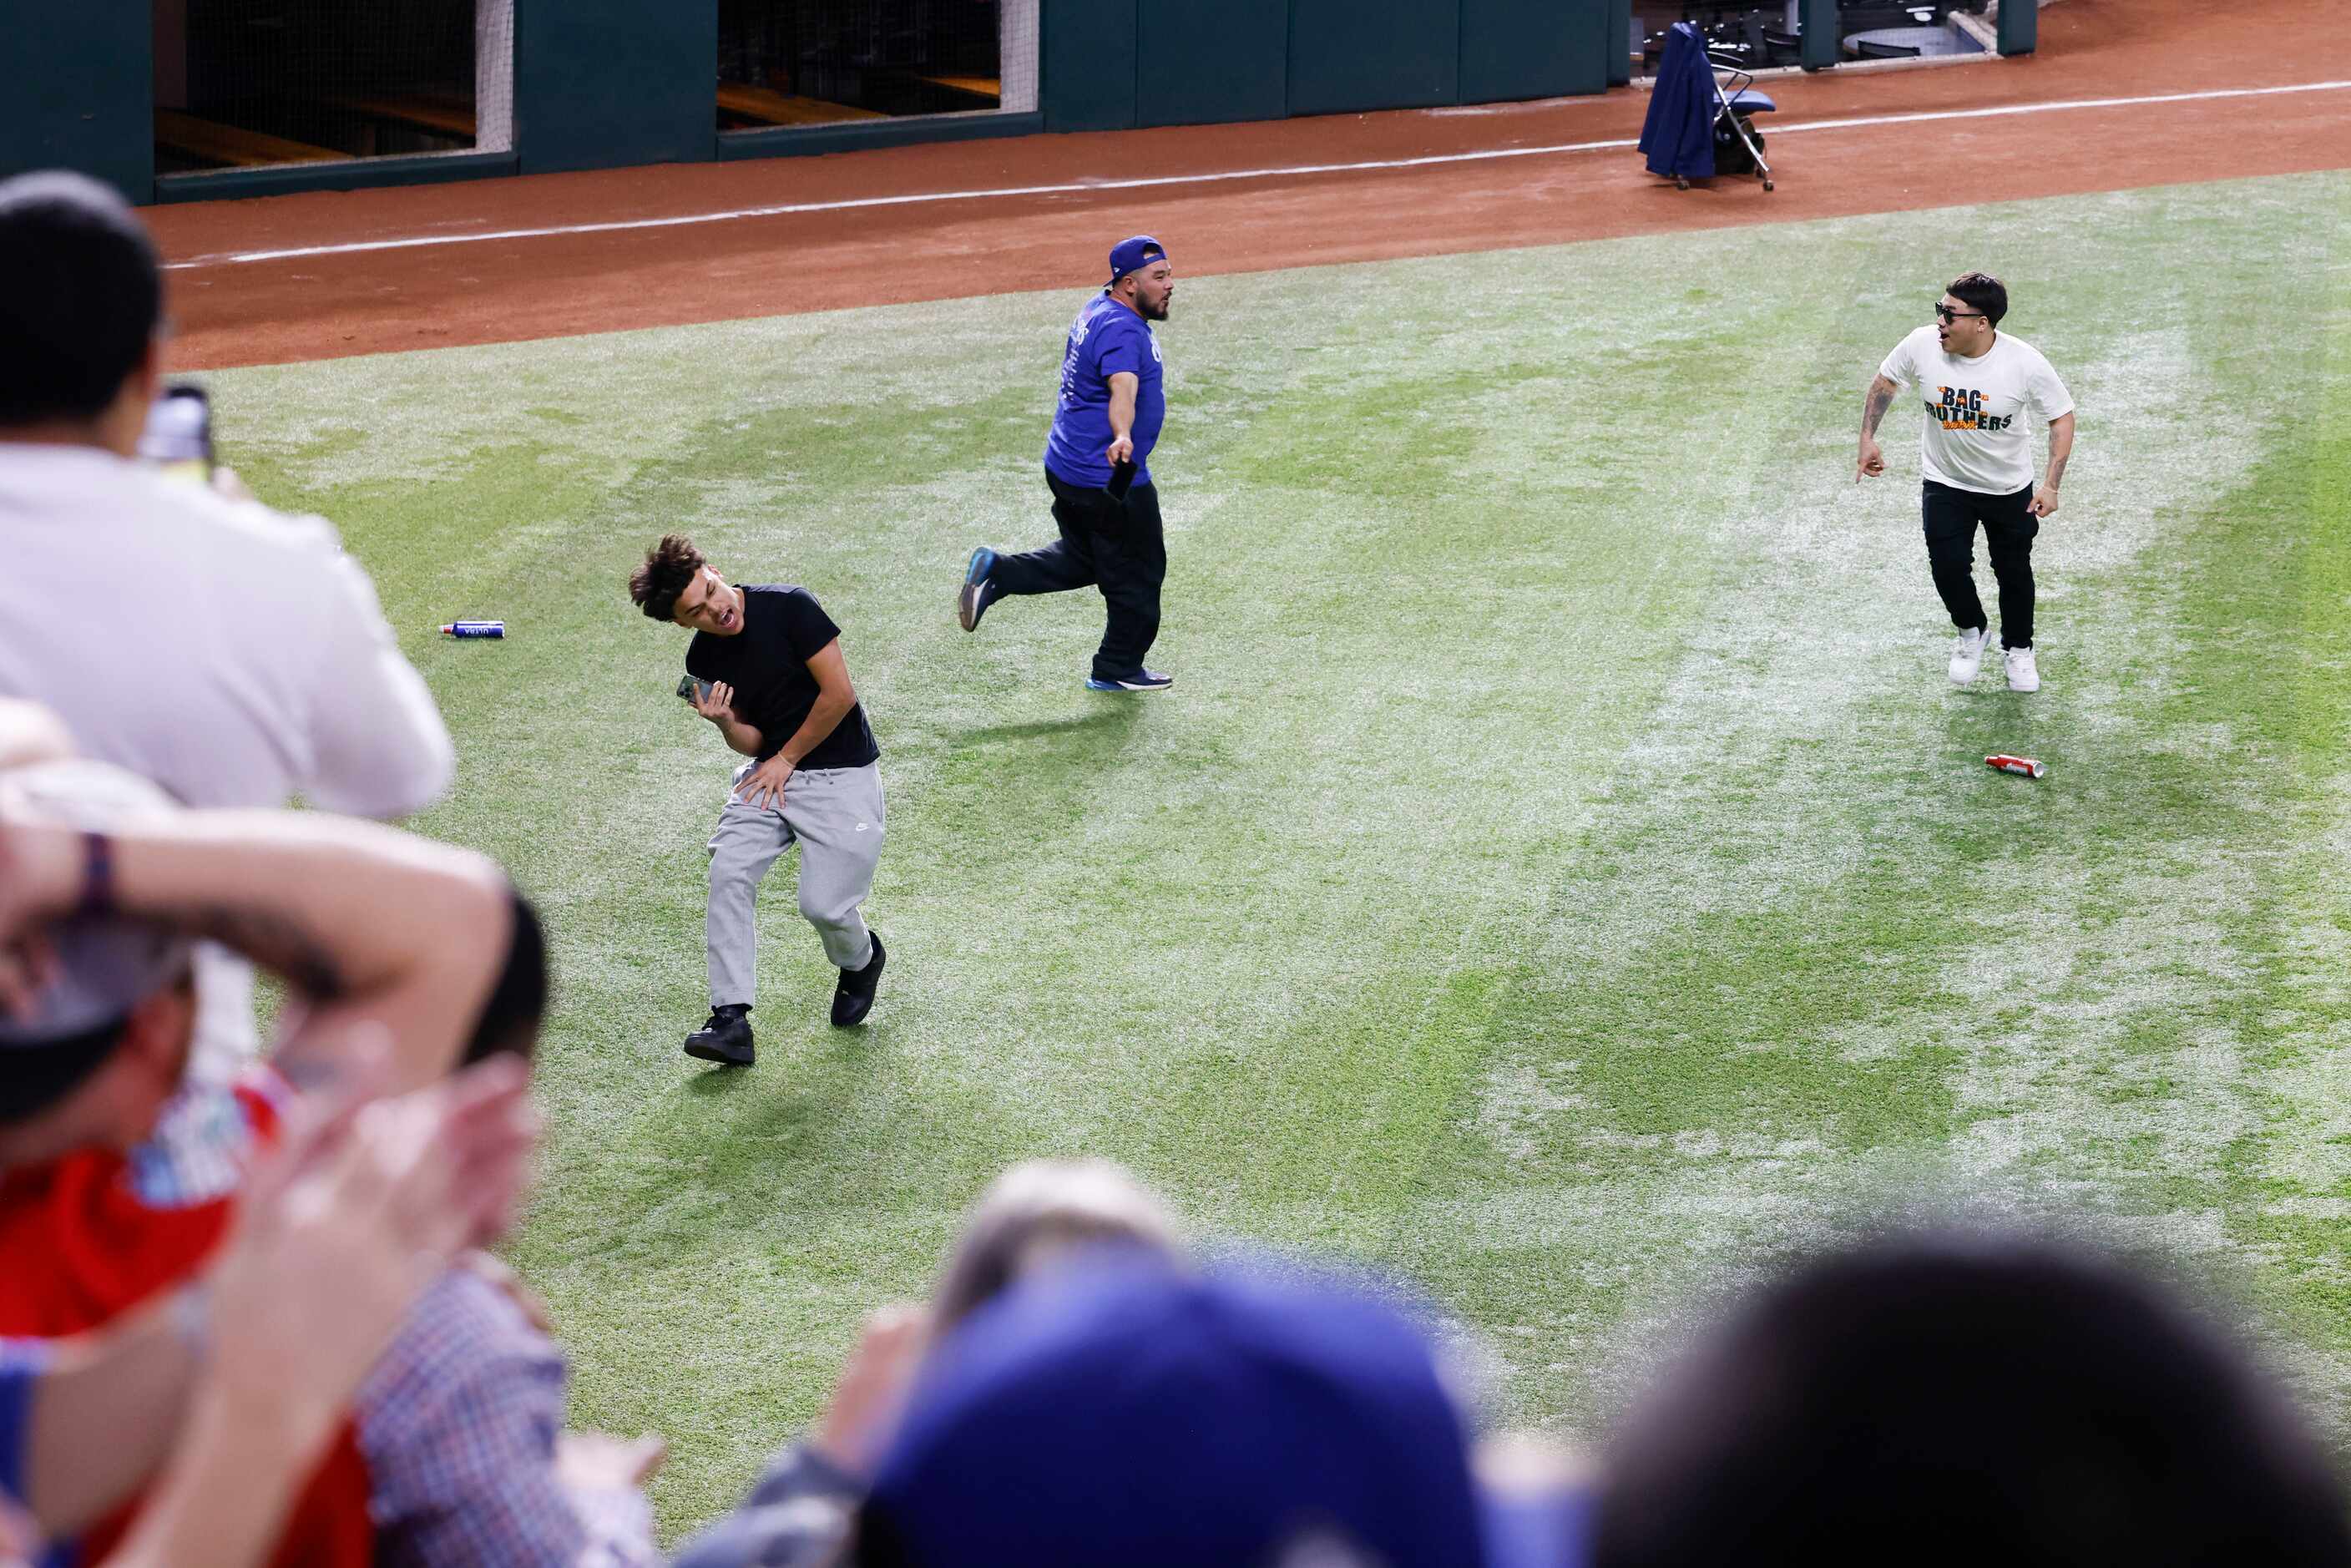 Some Texas Rangers fans ran onto the field following Texas Rangers’ winning the World Series...